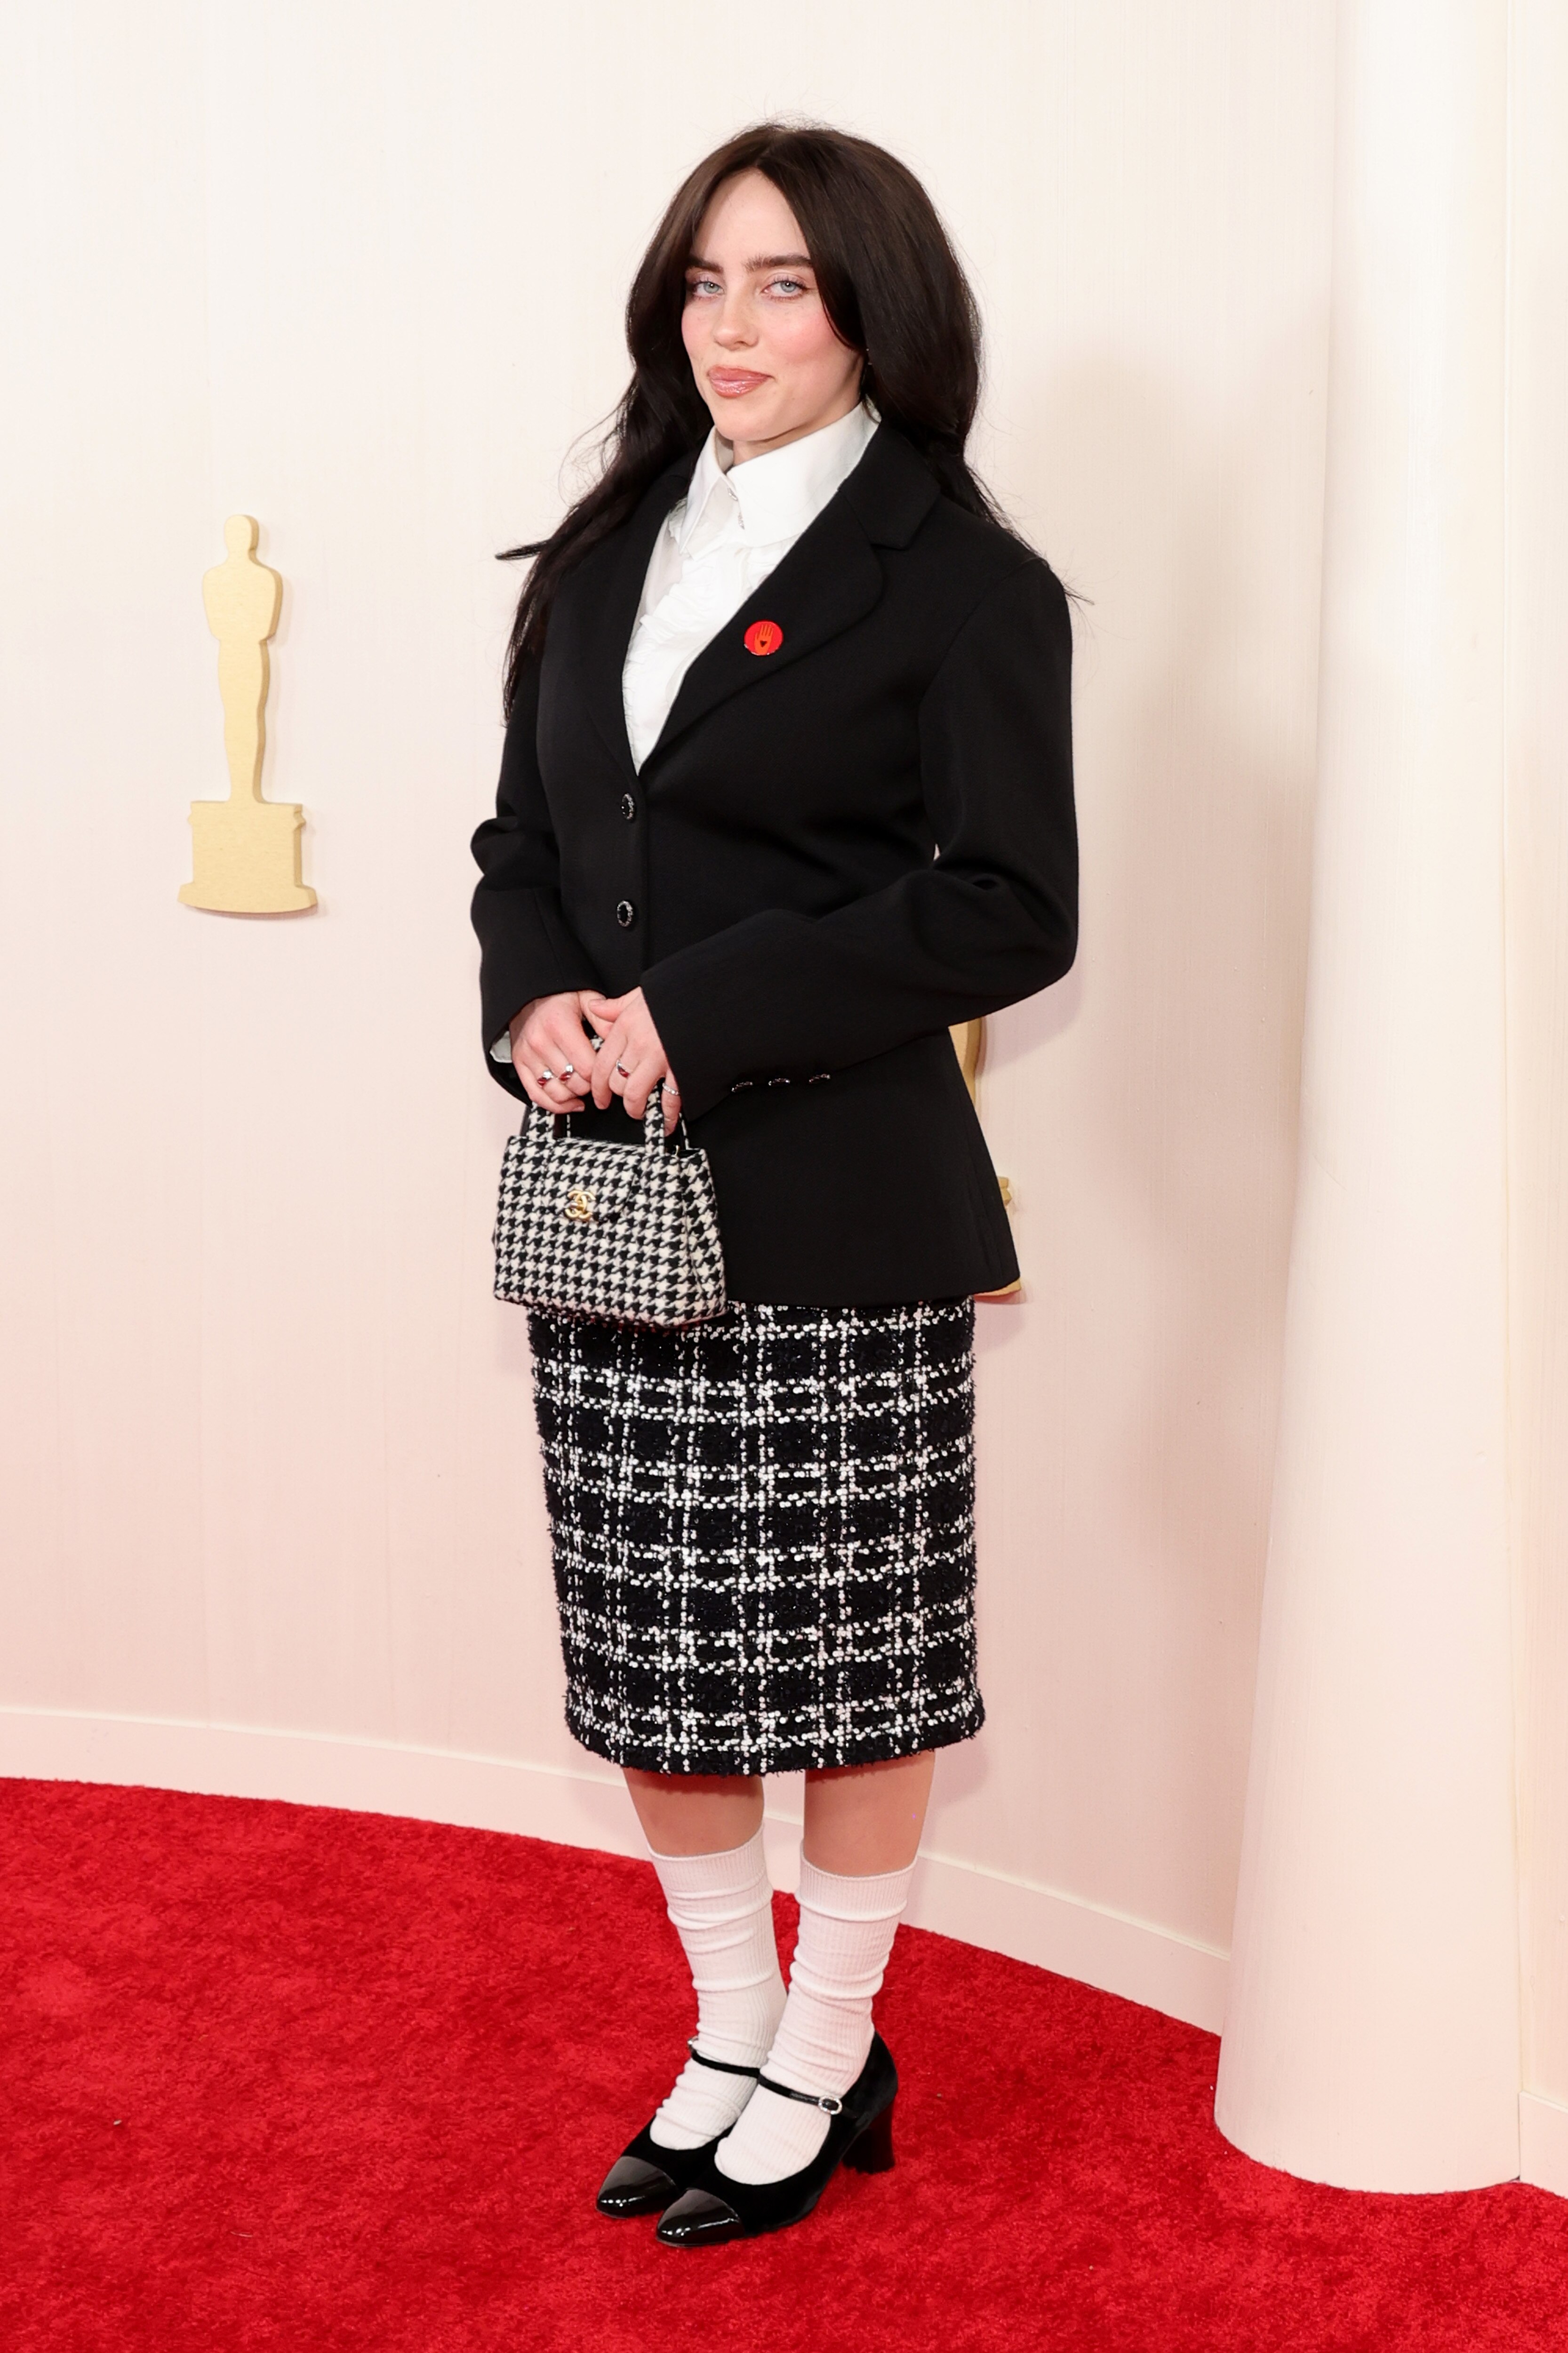 Billie Eilish poses on the Oscars red carpet.